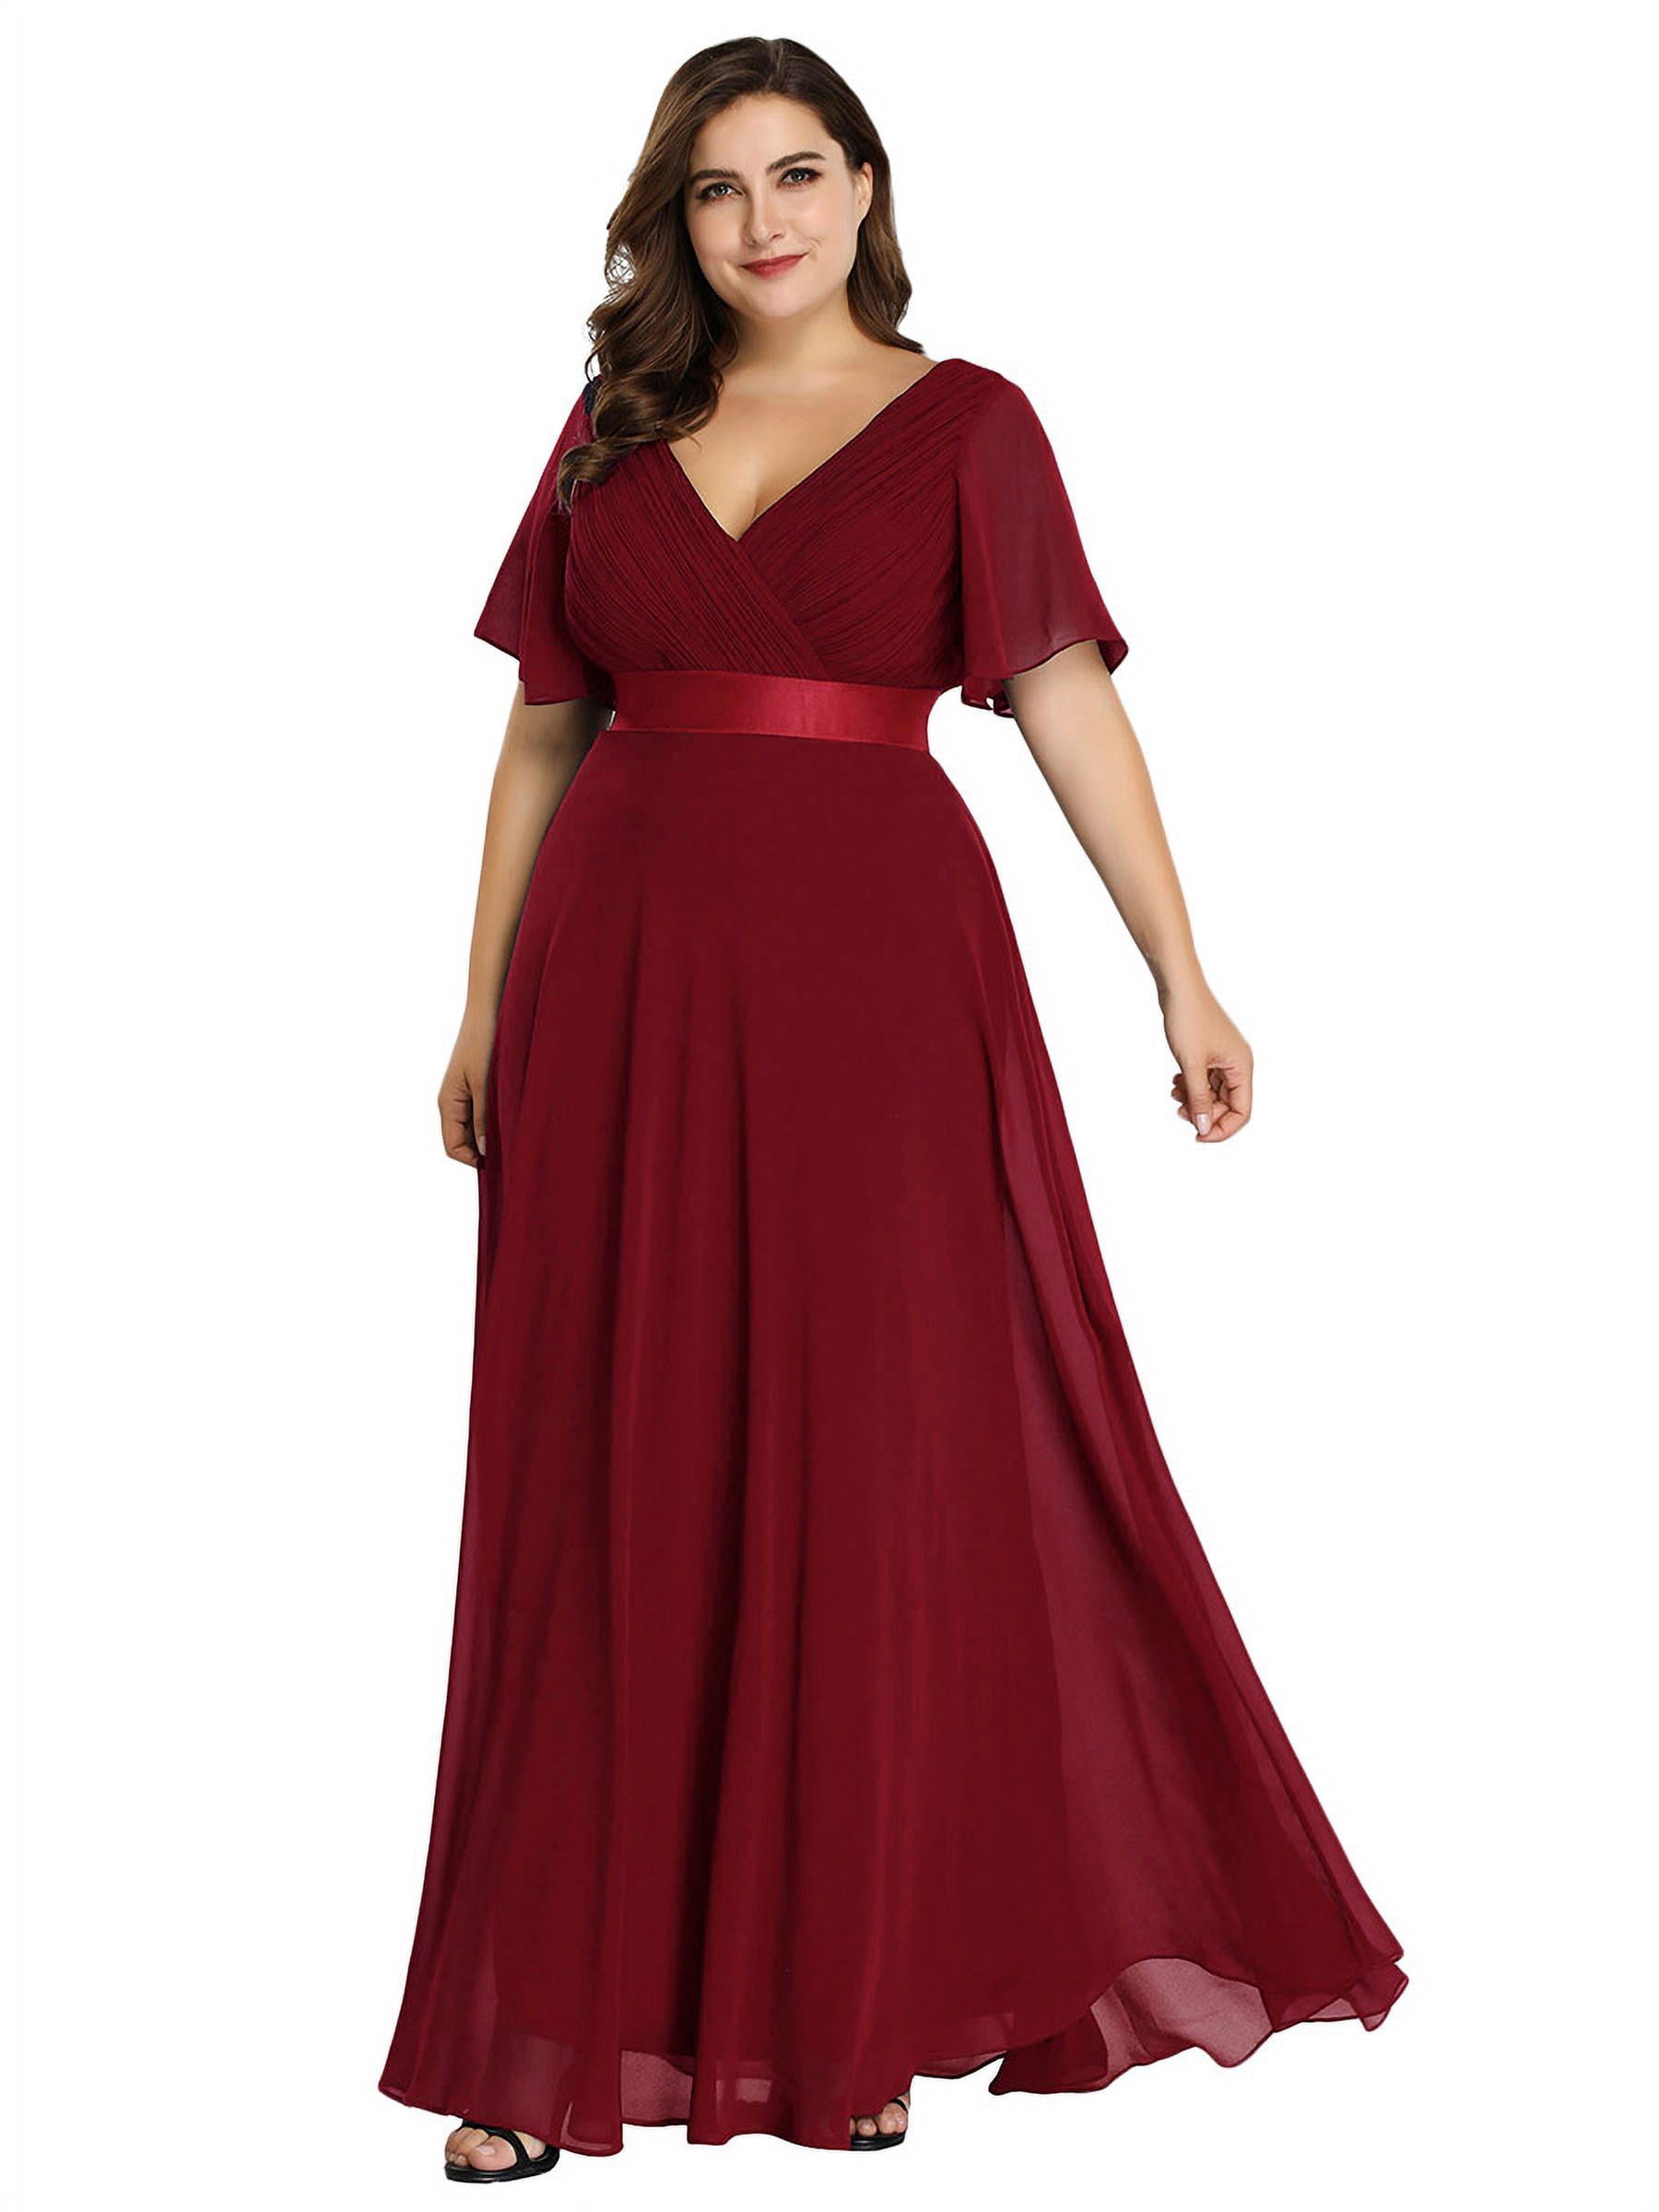 Ever-Pretty Women Formal Long Lace Plus Size Burgundy Bride Maxi Dress 09993 